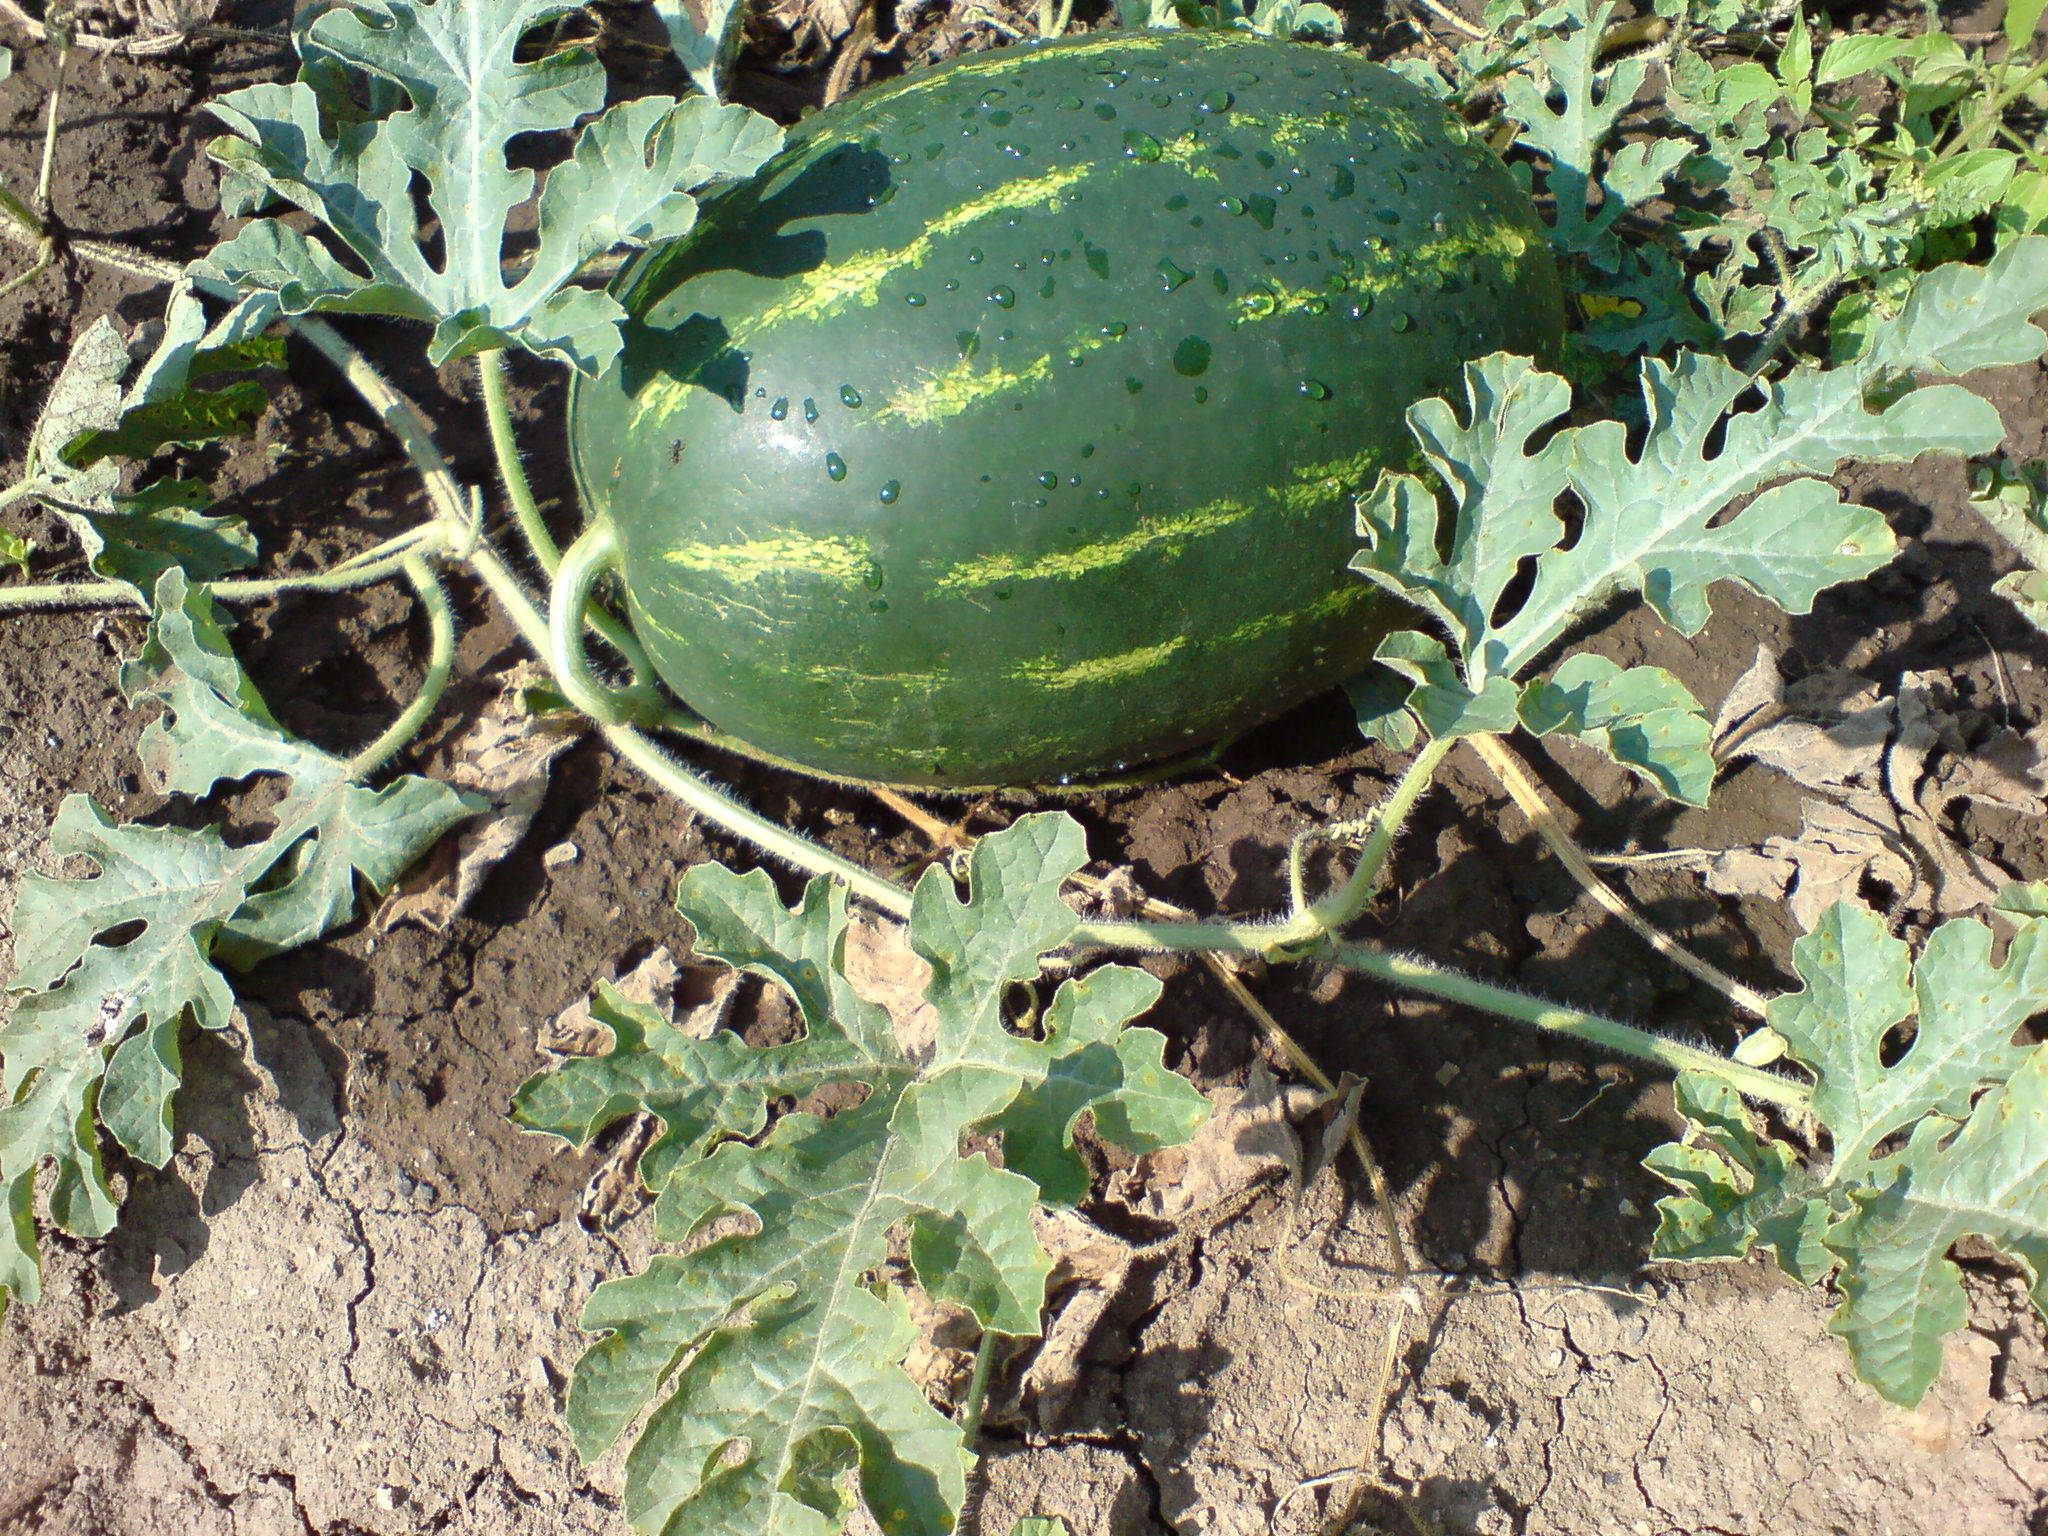 Bulgarian watermelon